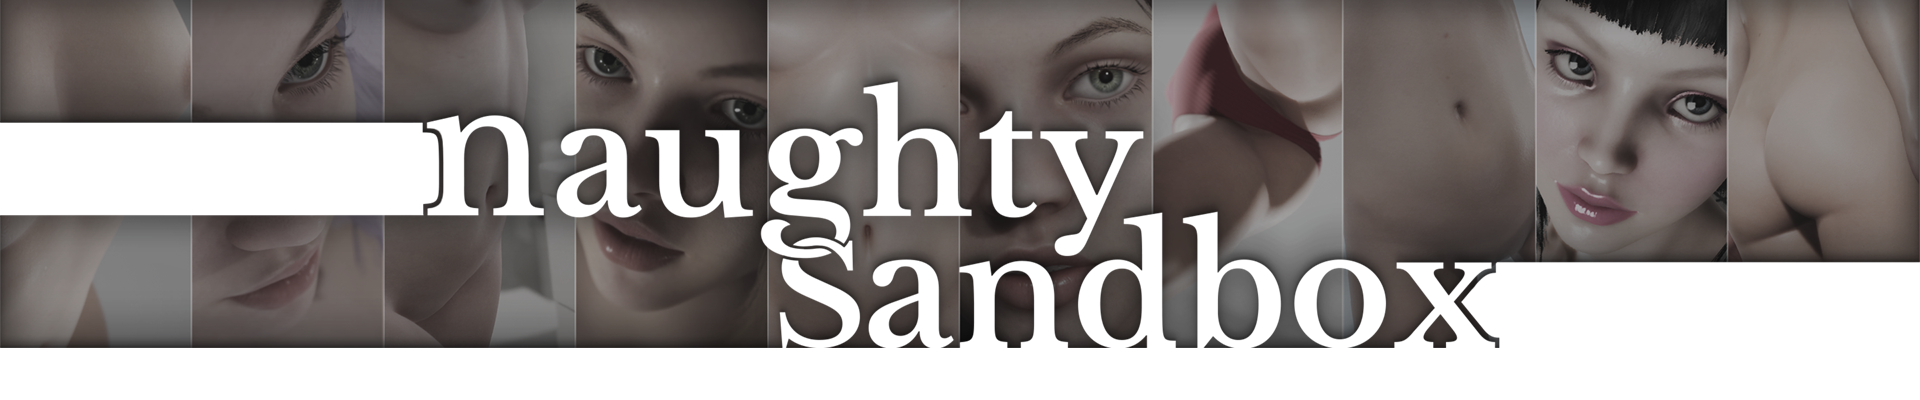 Naughty Sandbox [DLC]: Space Environment